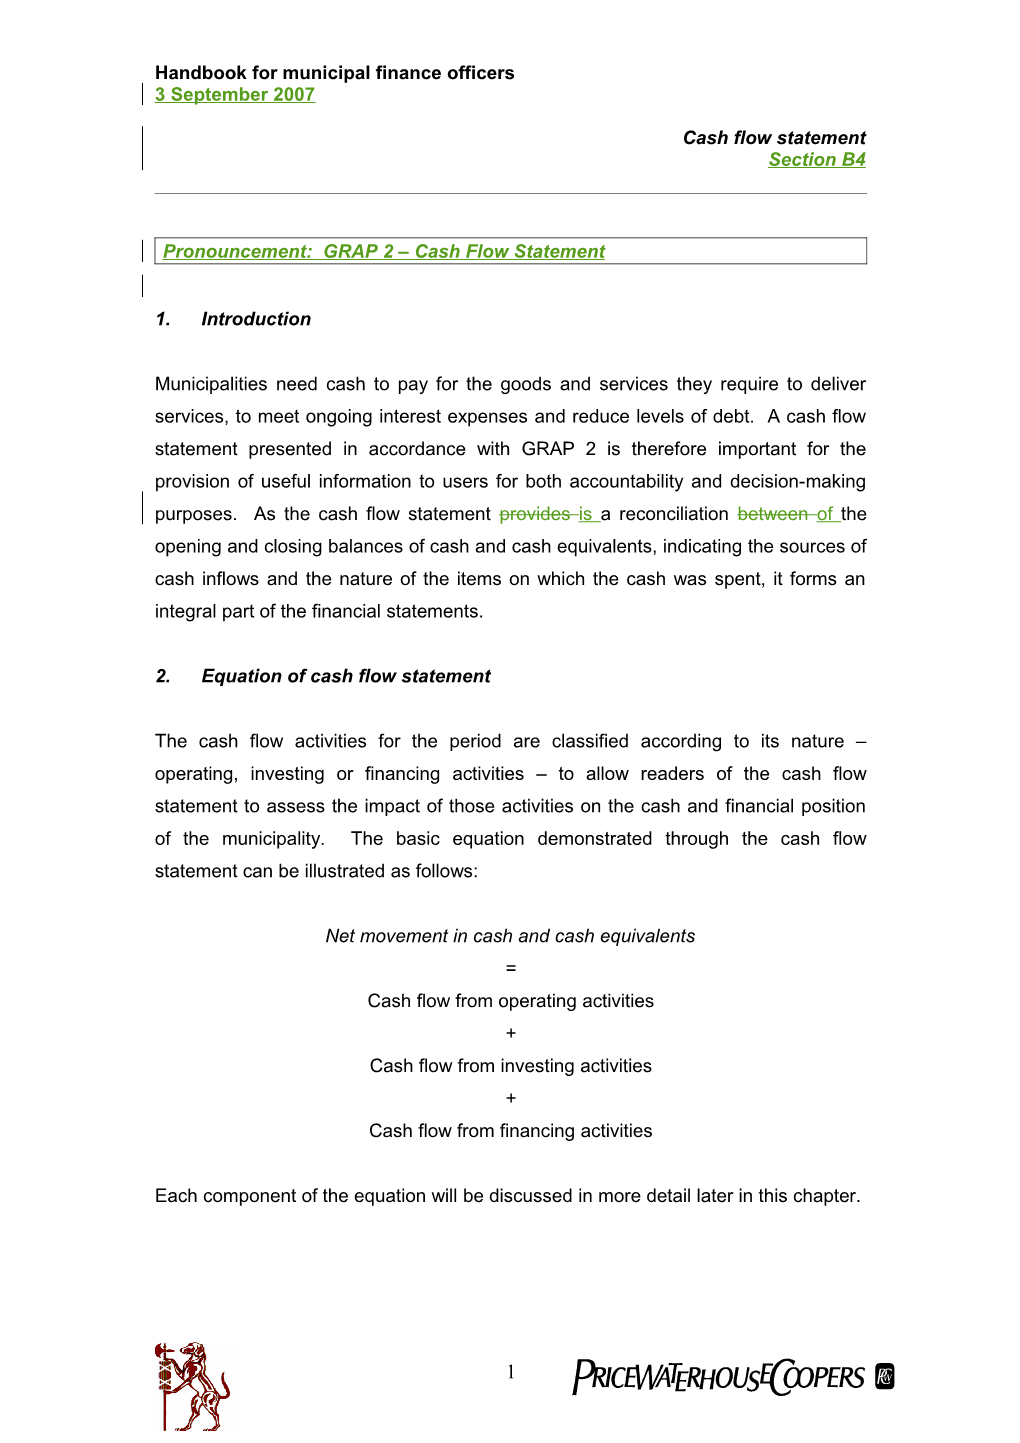 Presentation of Financial Statements (GRAP 1)